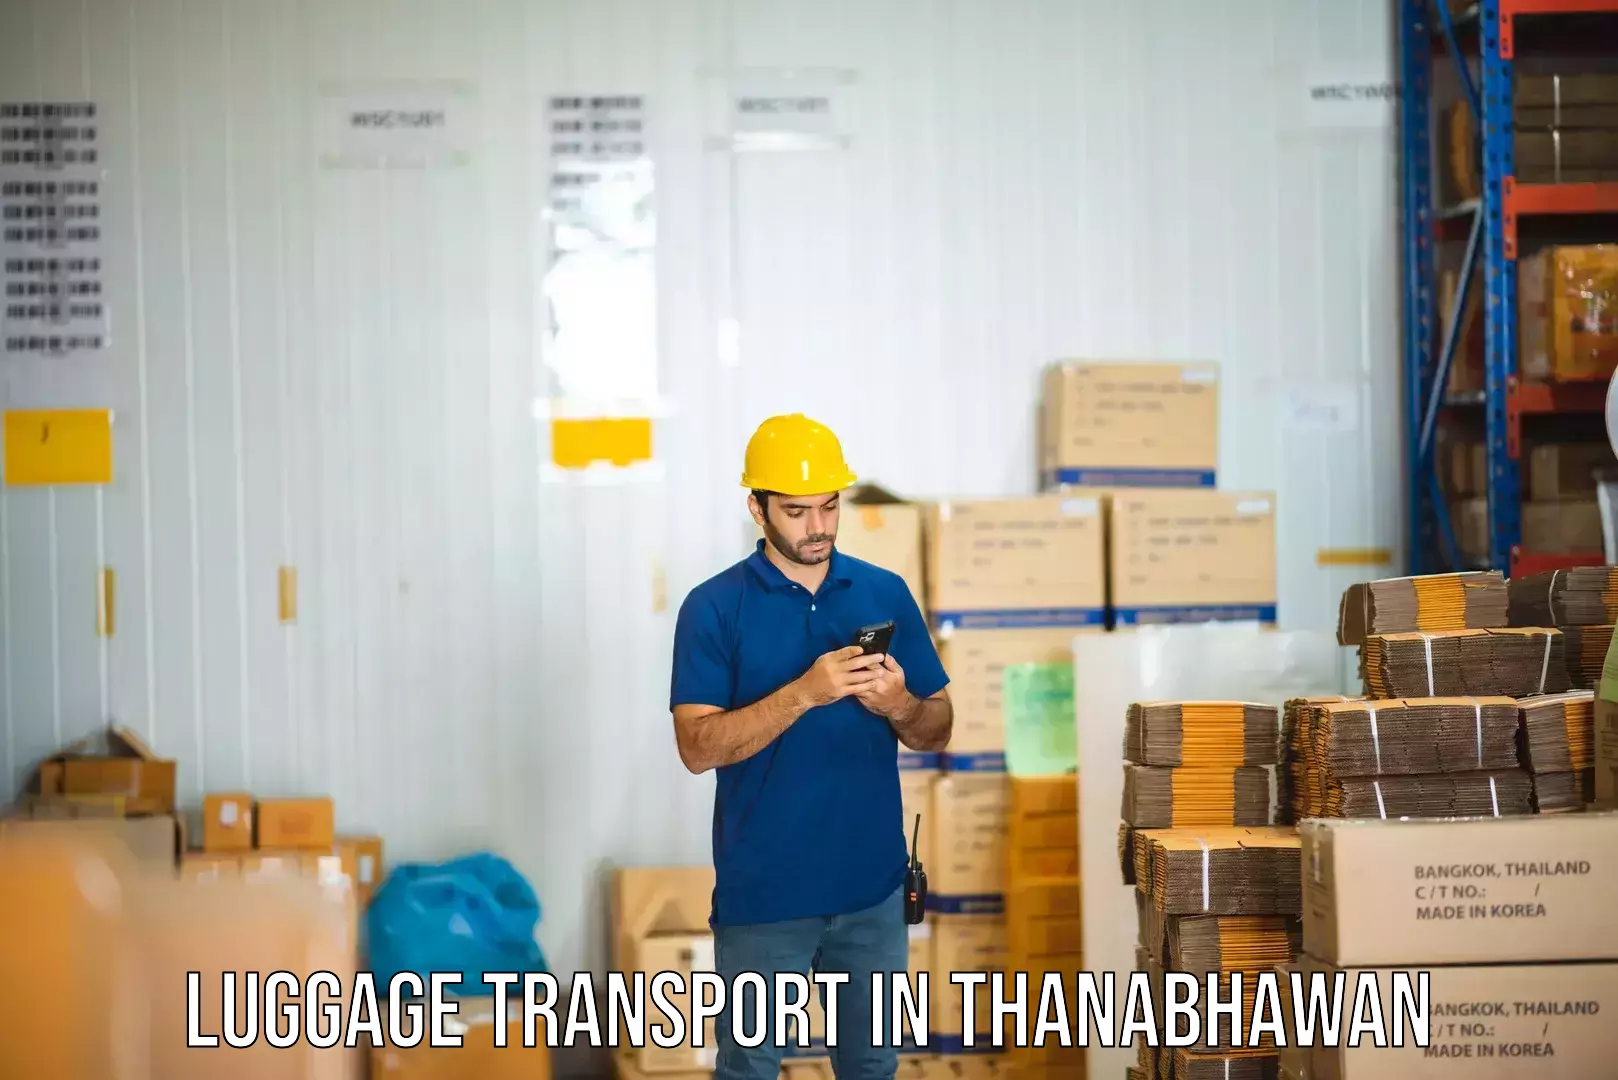 Luggage transport operations in Thanabhawan